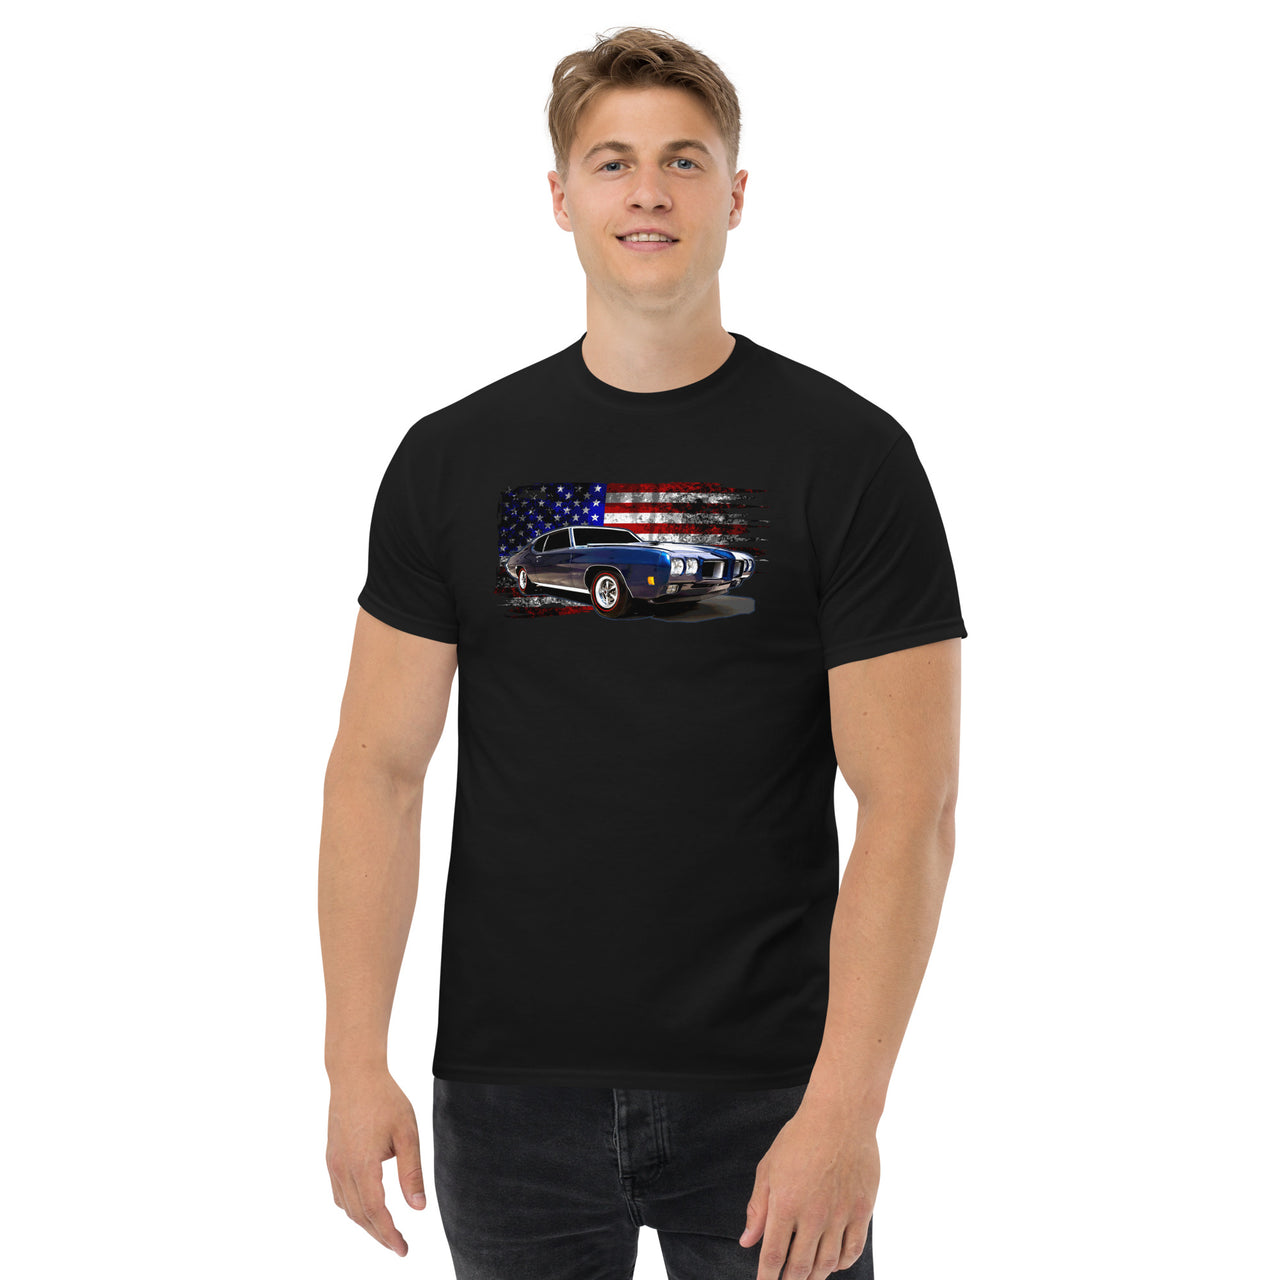 1970 GTO American Flag T-Shirt modeled in black